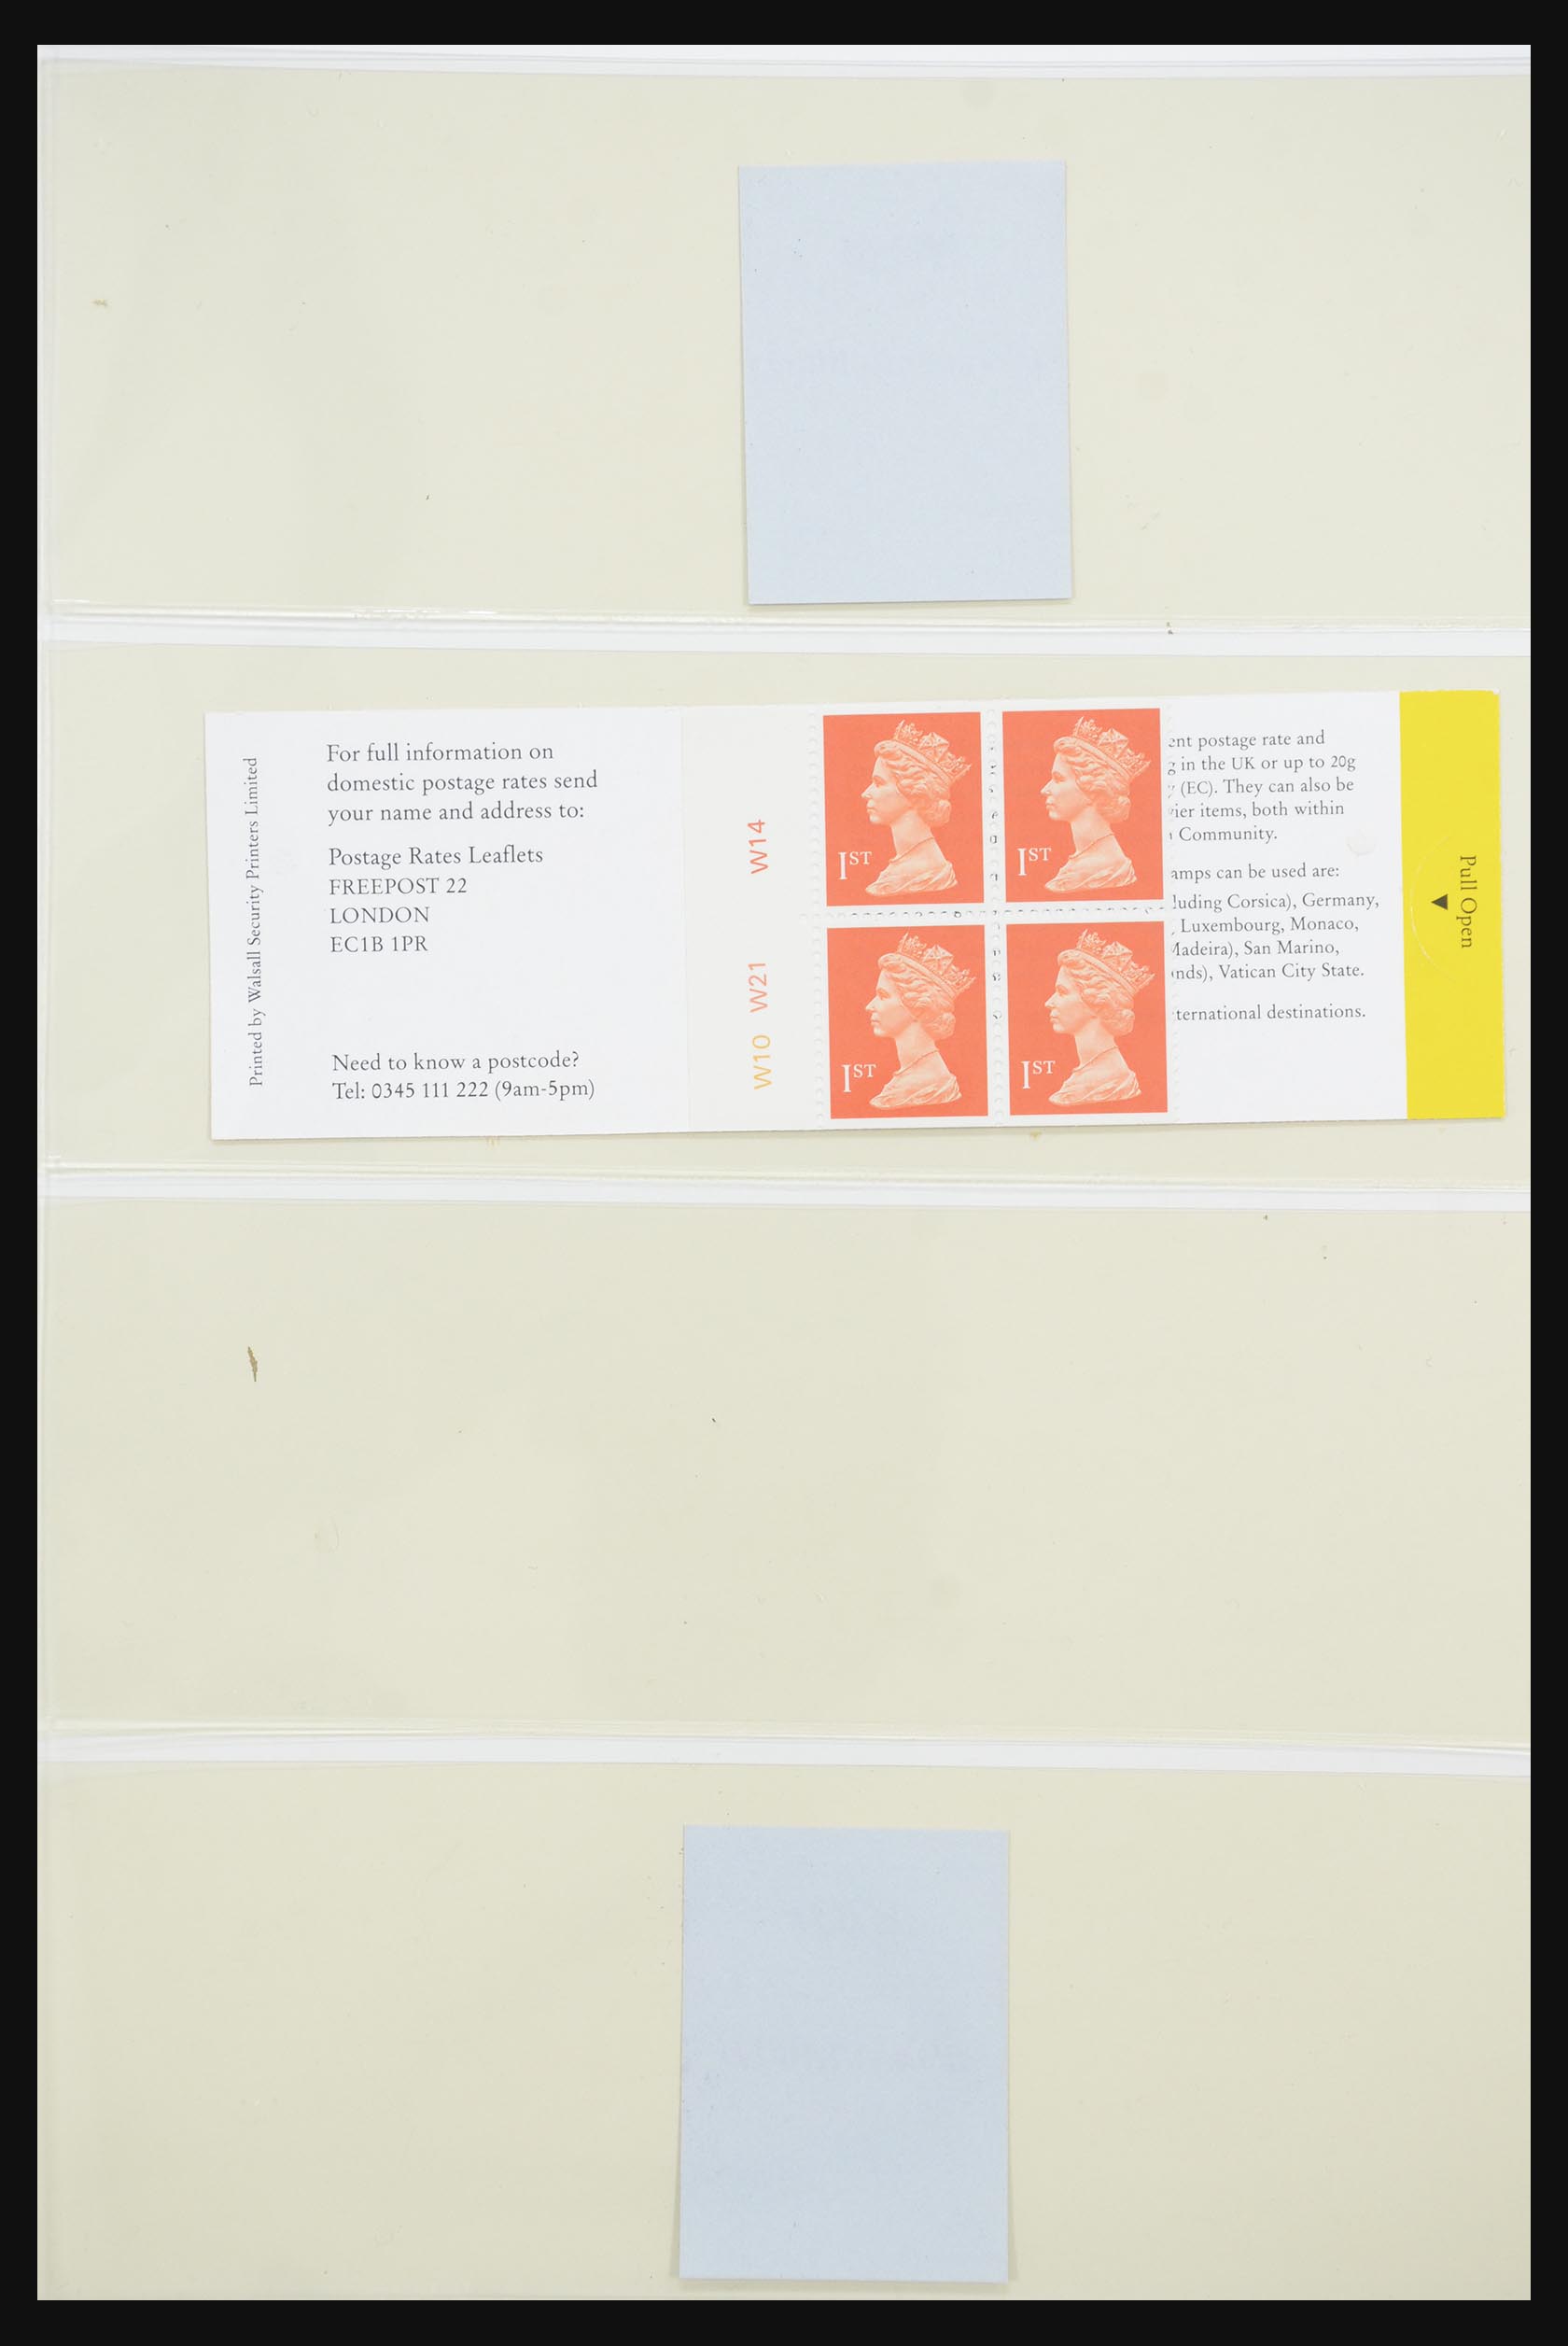 31960 028 - 31960 Great Britain stampbooklets 1989-2000.